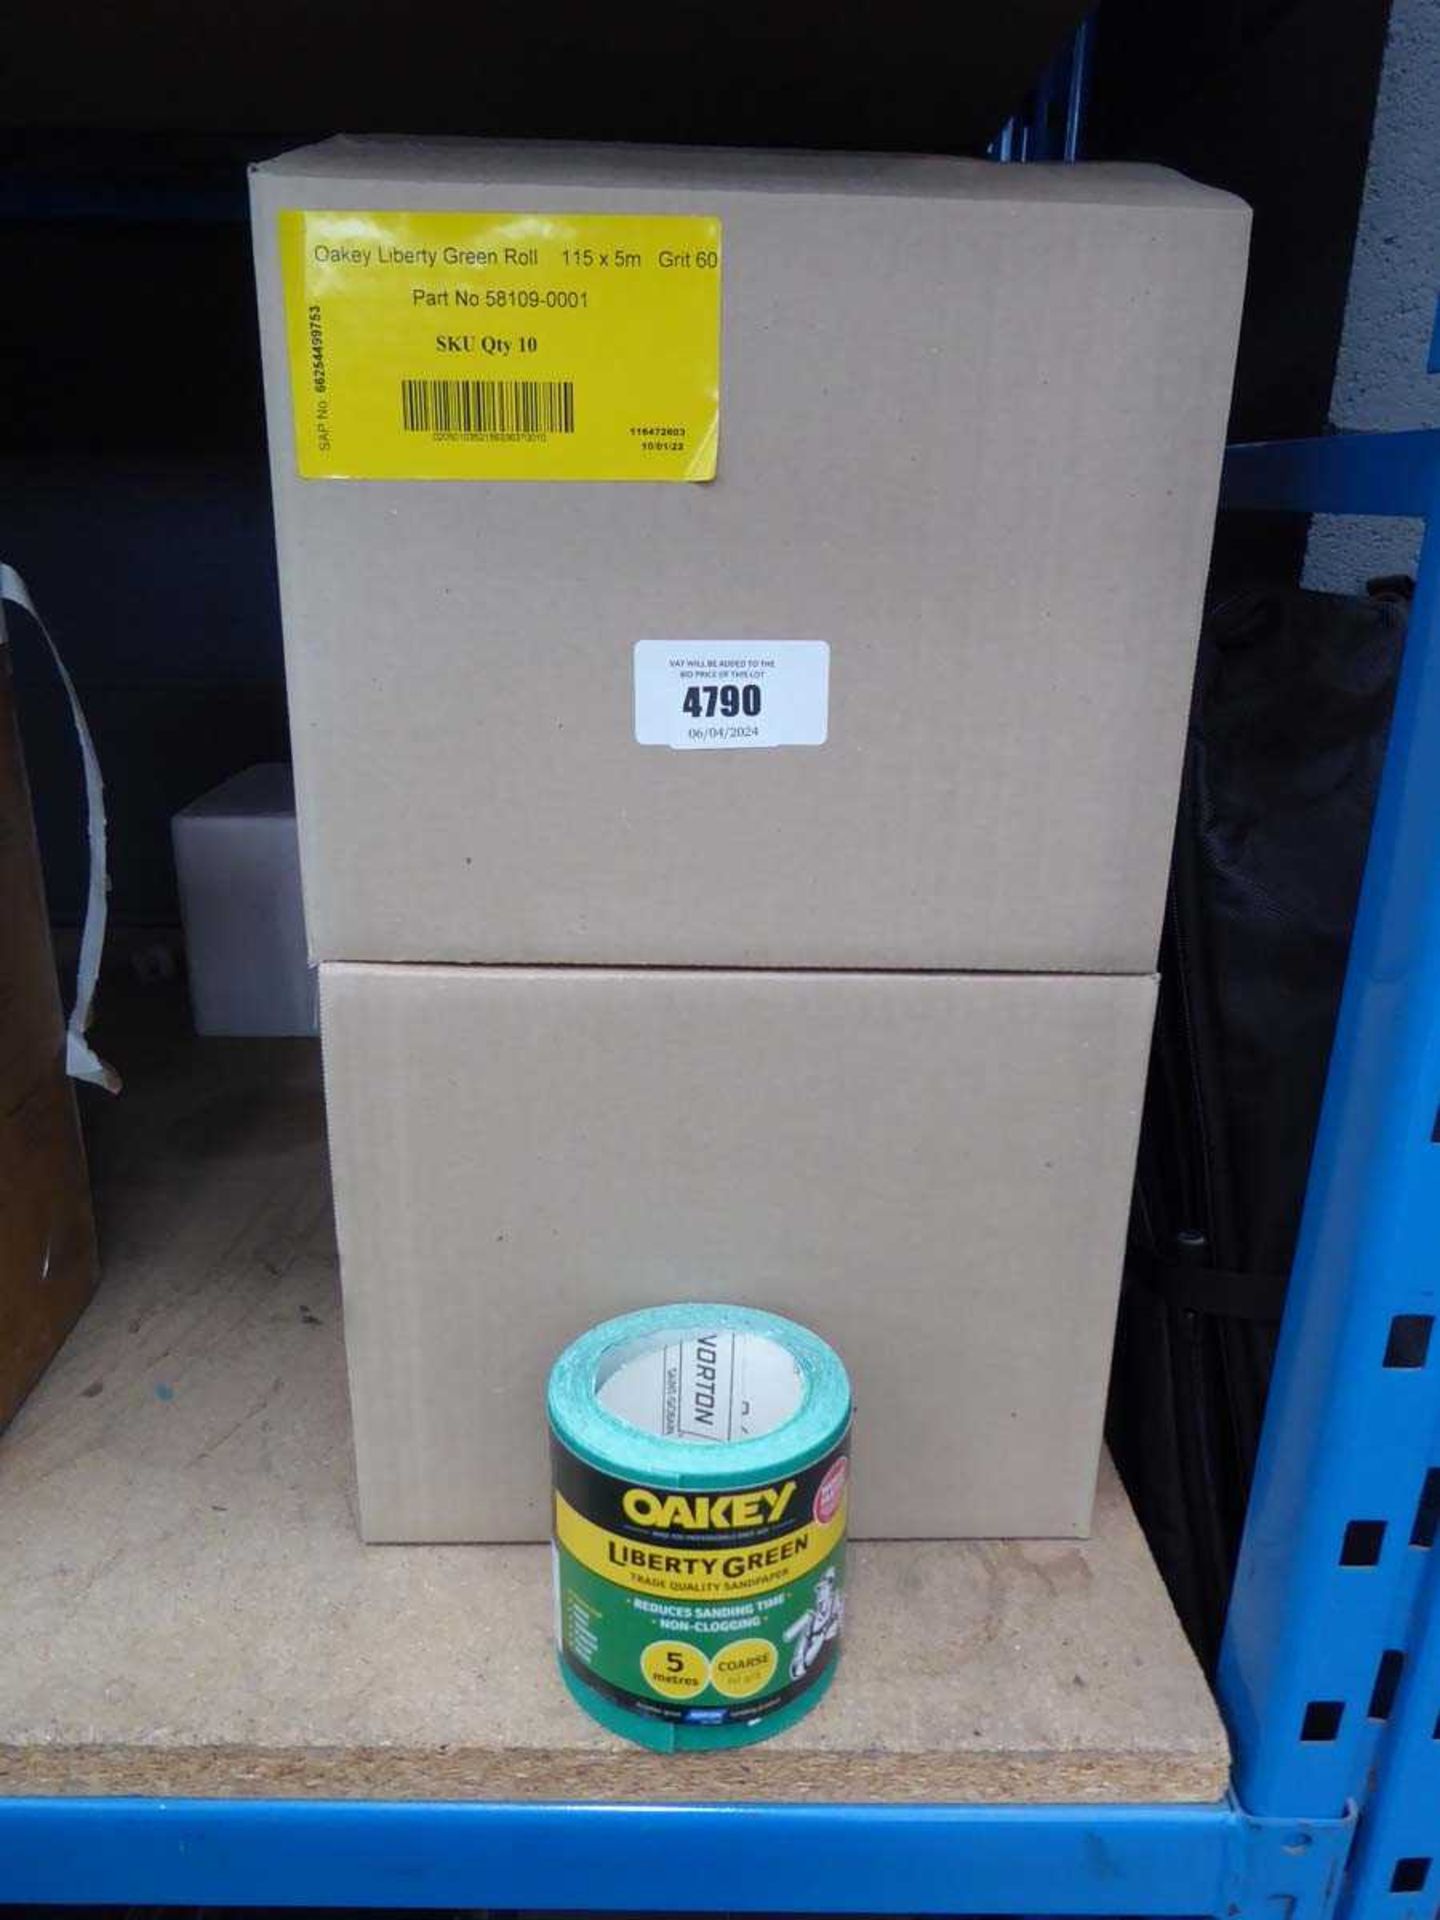 +VAT 4 boxes of Oakley Liberty Green 115x5m 60-grit rolls of sandpaper